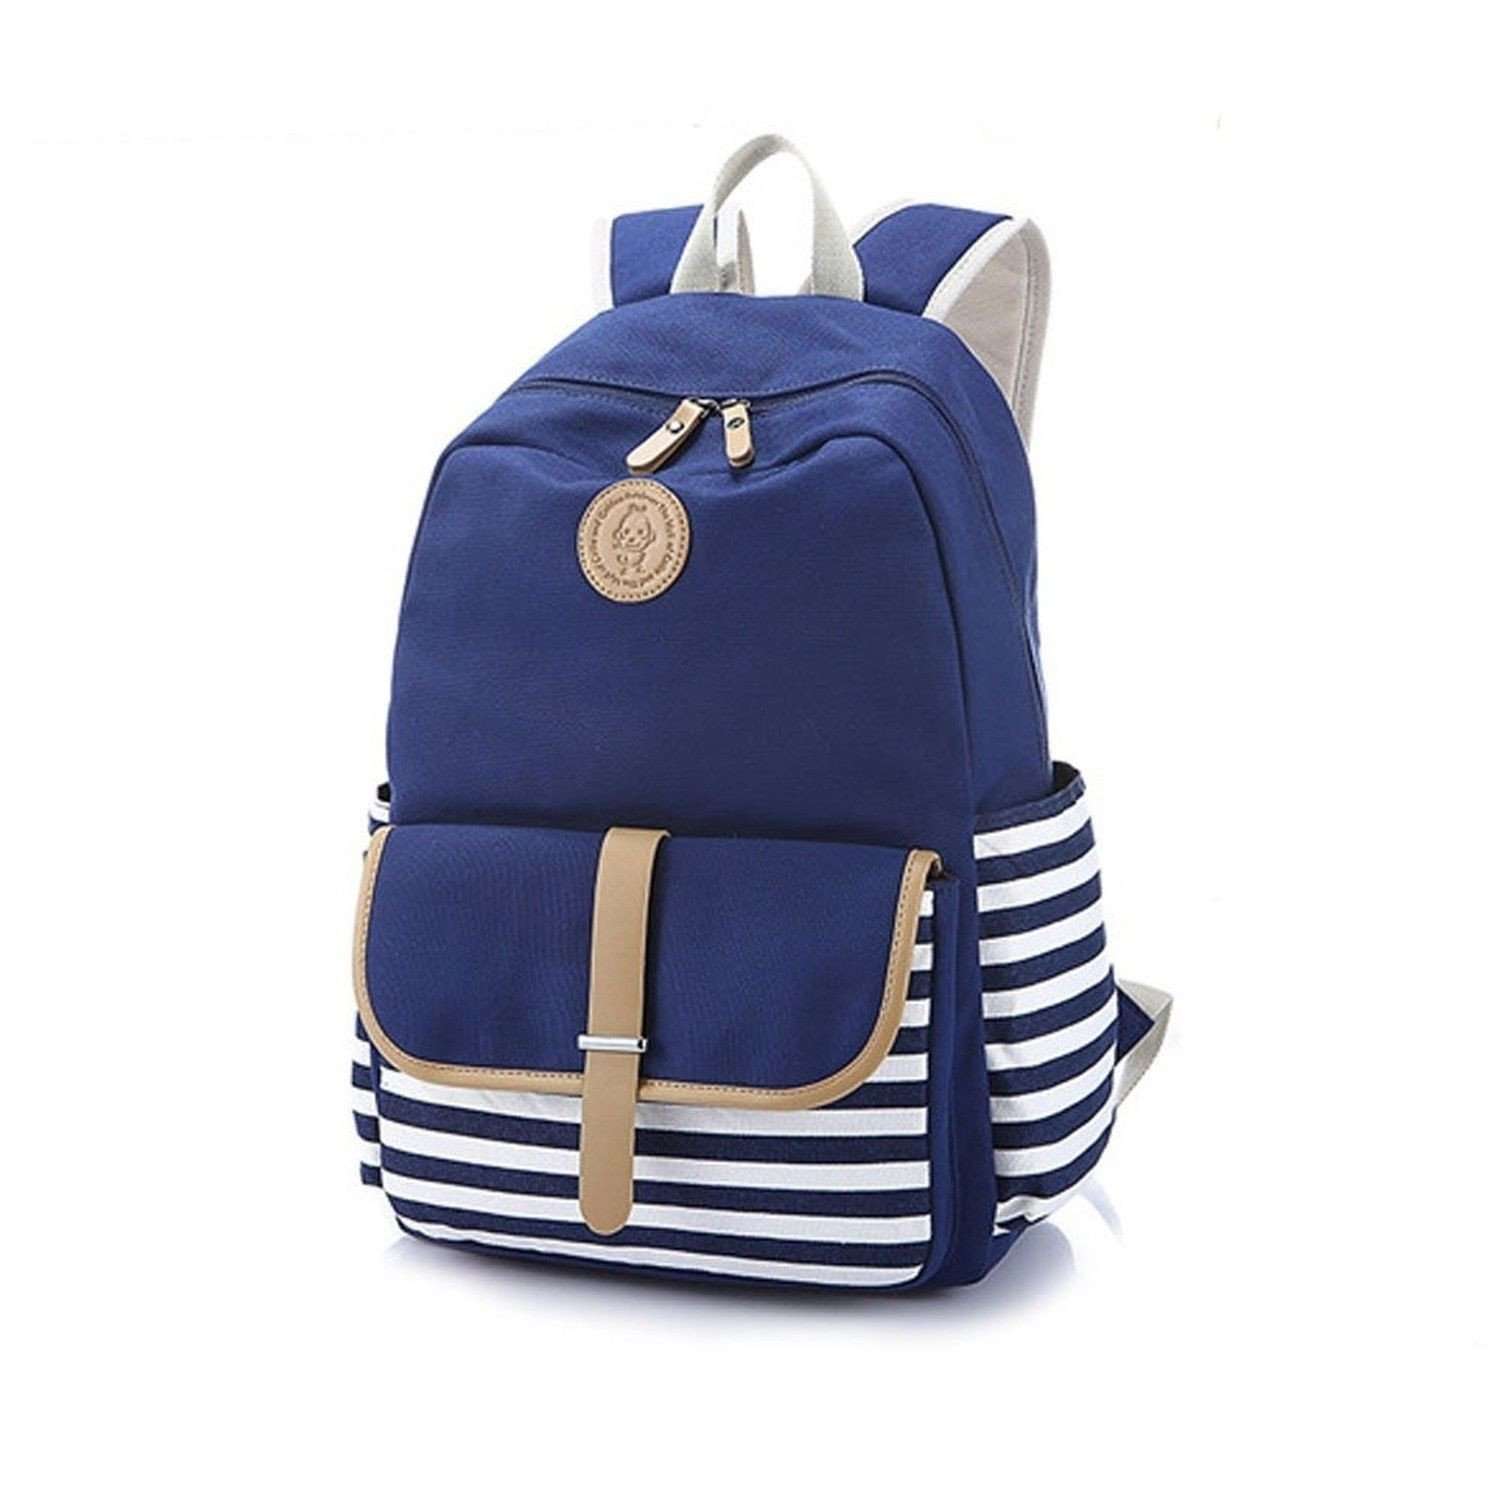 Abshoo Causal Travel Canvas Rucksack Backpacks For Girls School ...